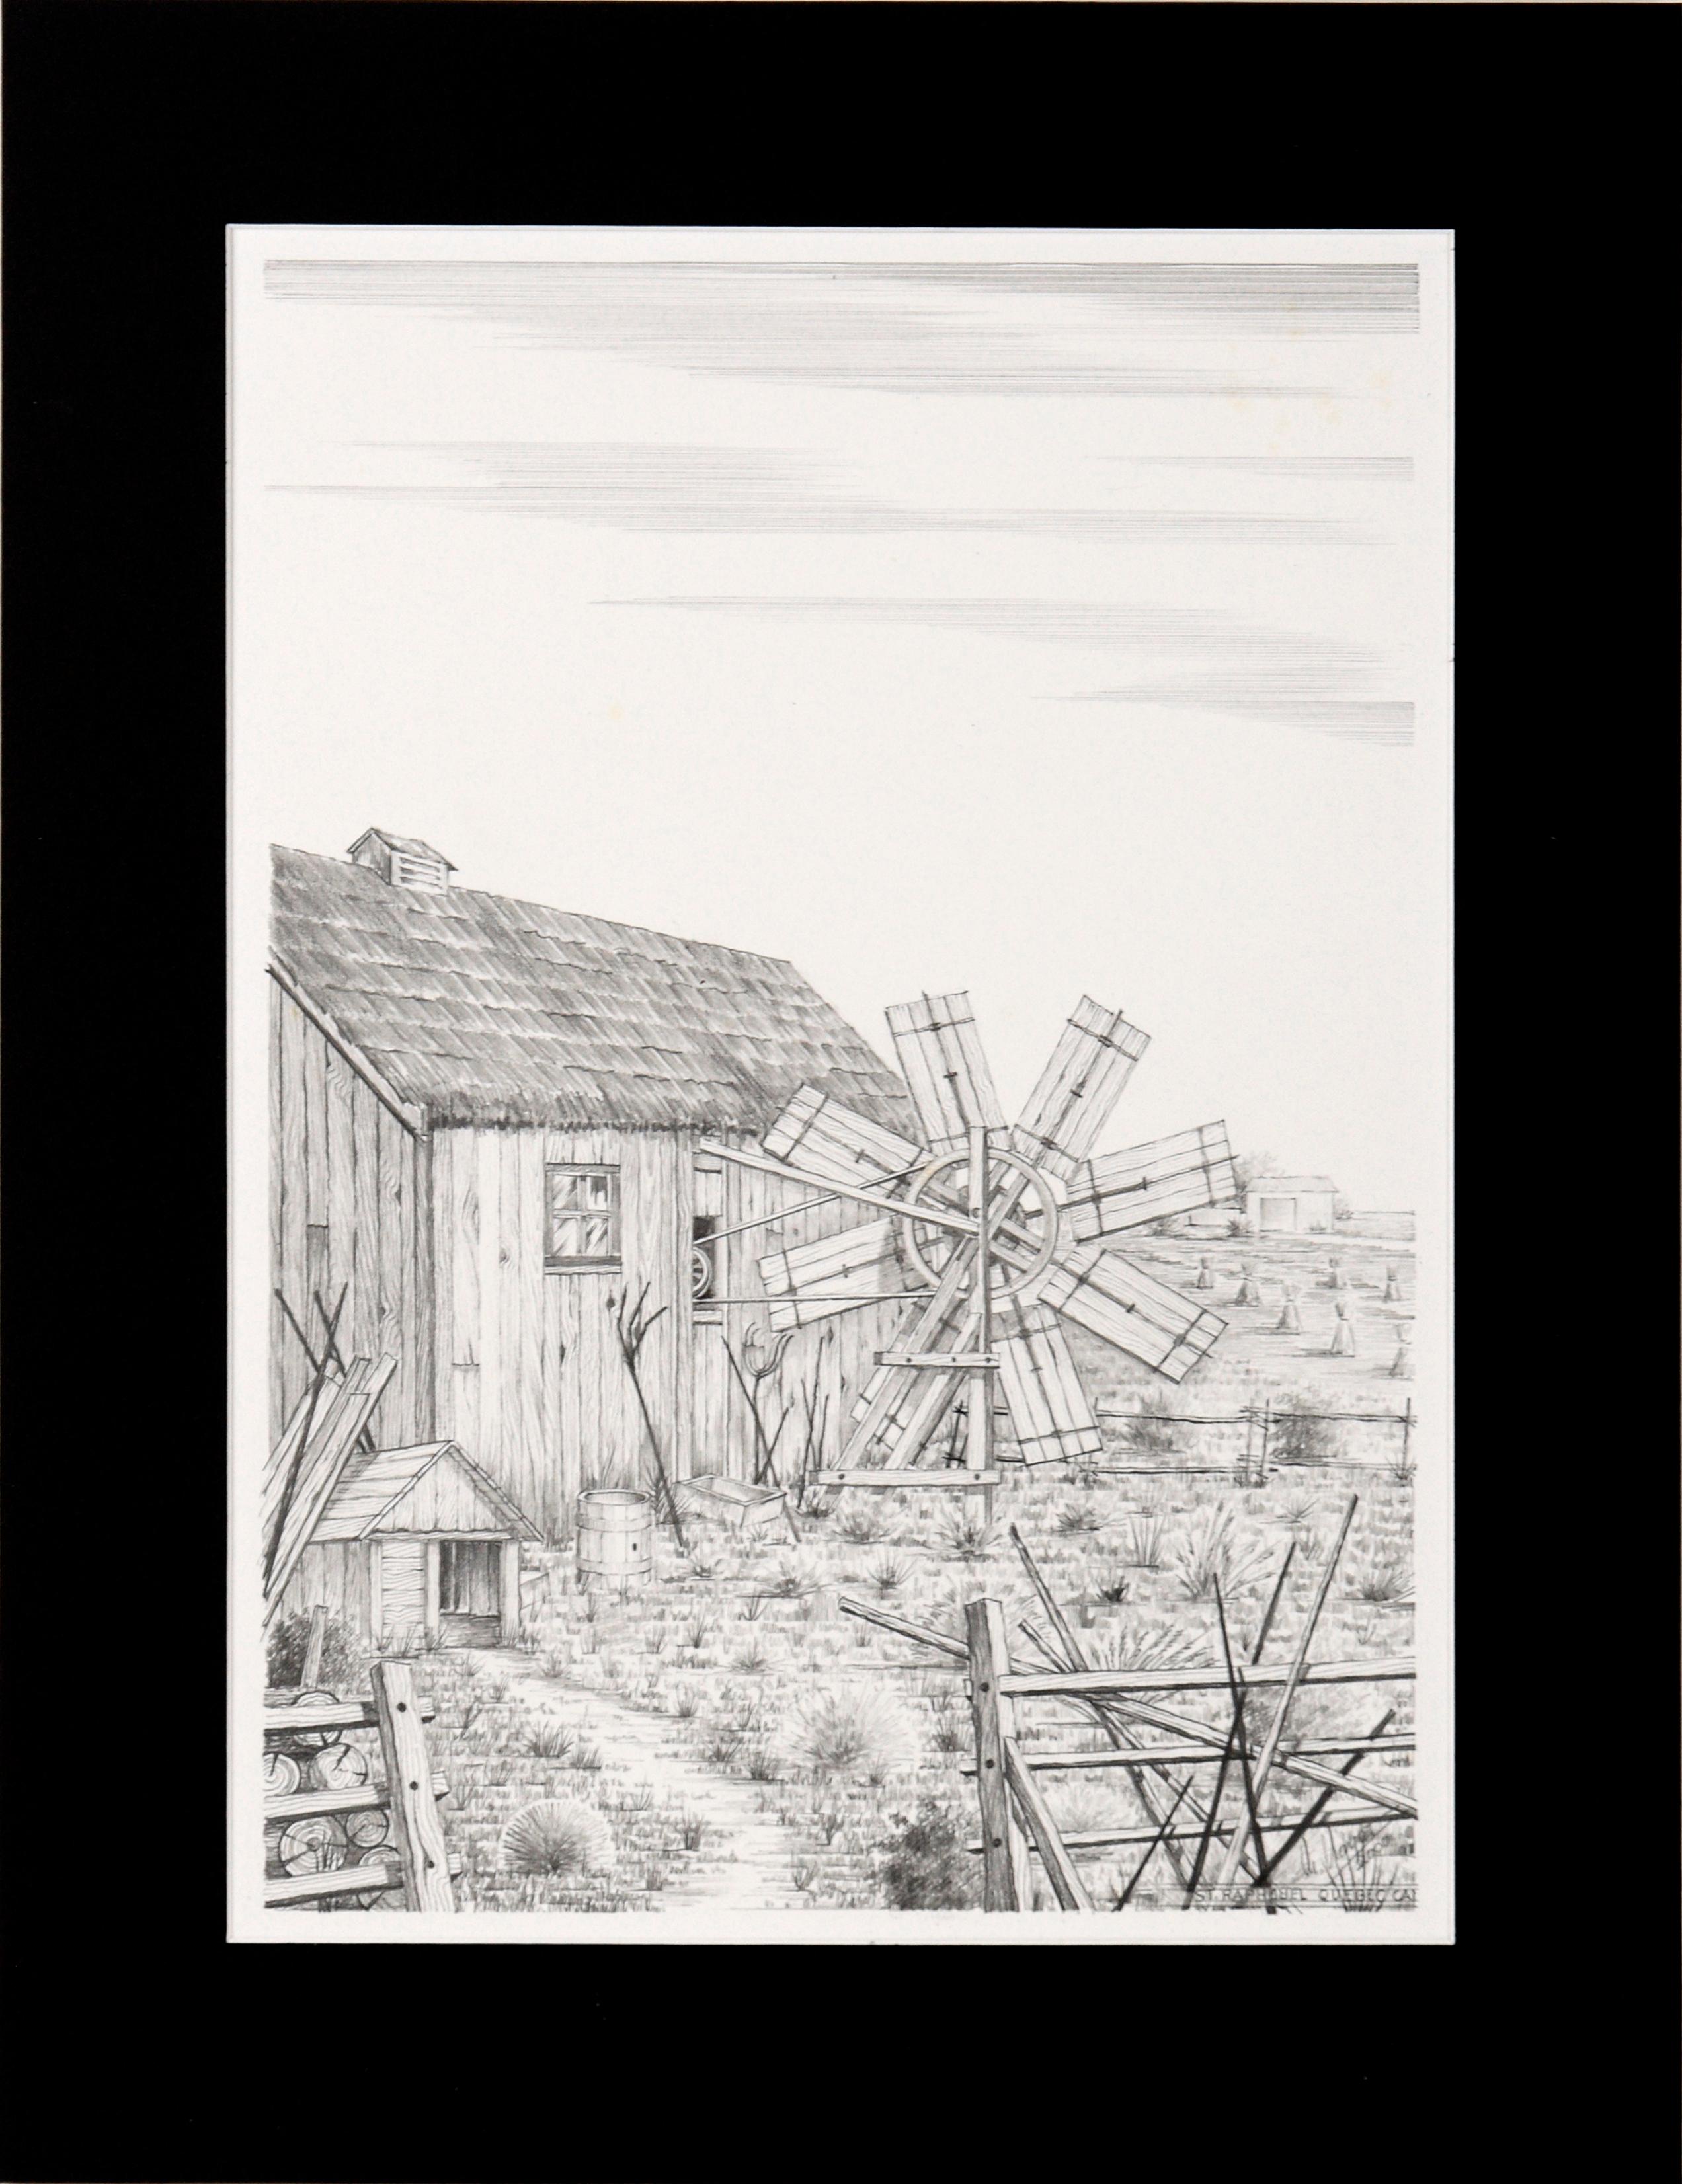 M Mayer Landscape Art - St. Raphael, Quebec, Canada - Hyper Realistic Windmill Illustration